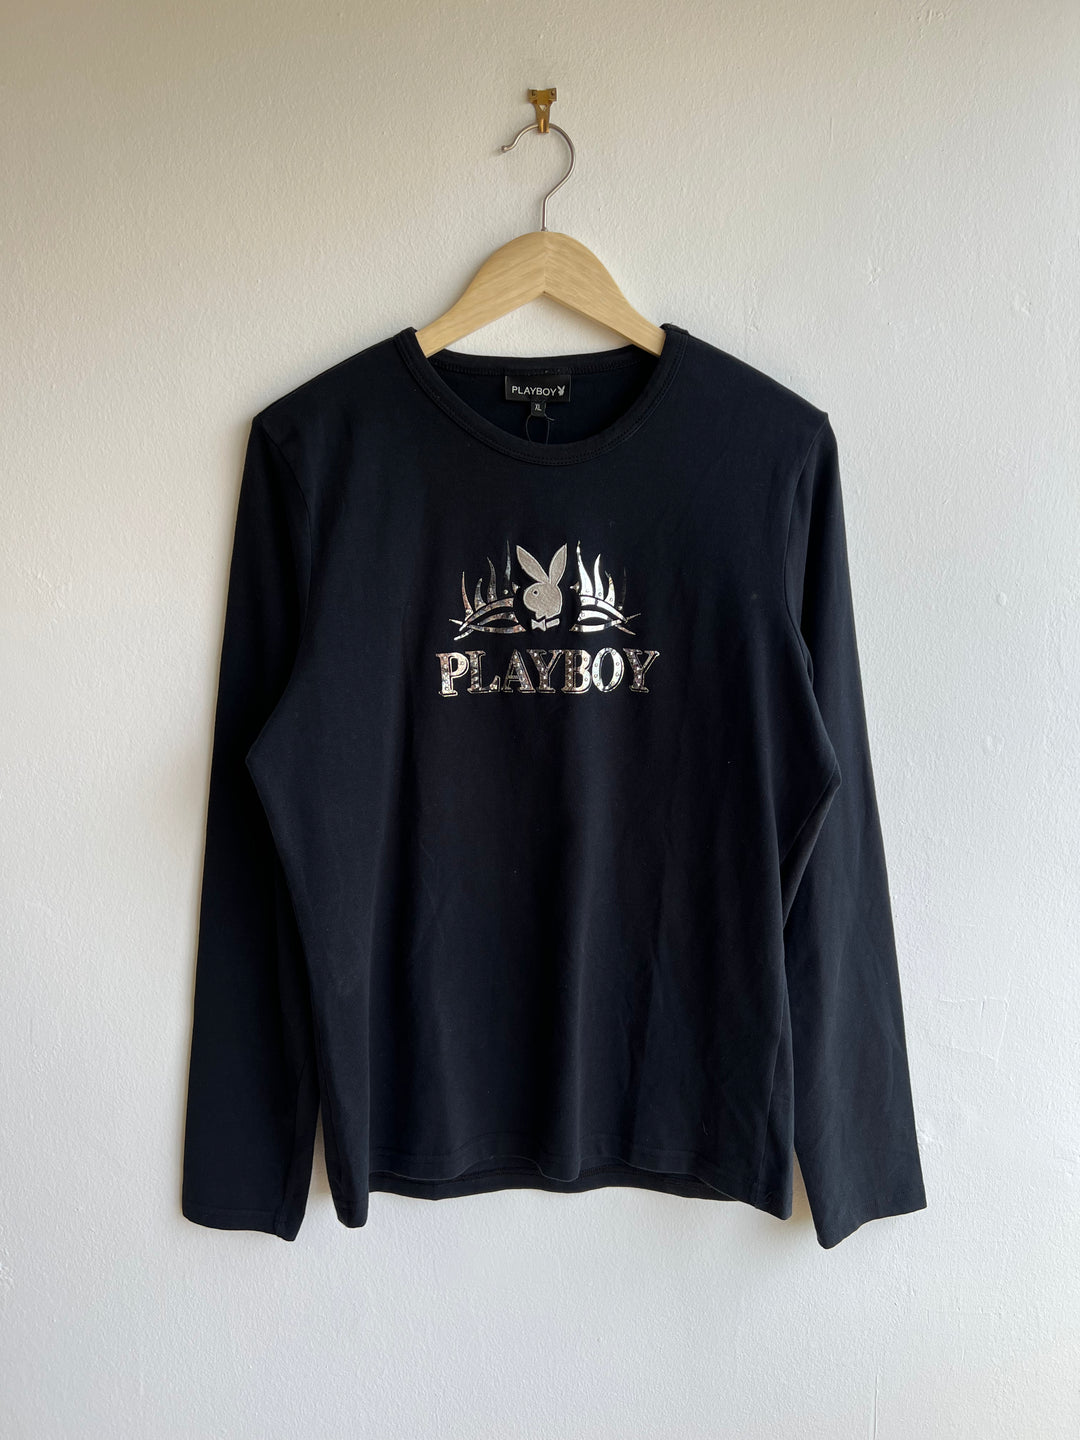 00’s Playboy Sweatshirt Women’s Extra Large